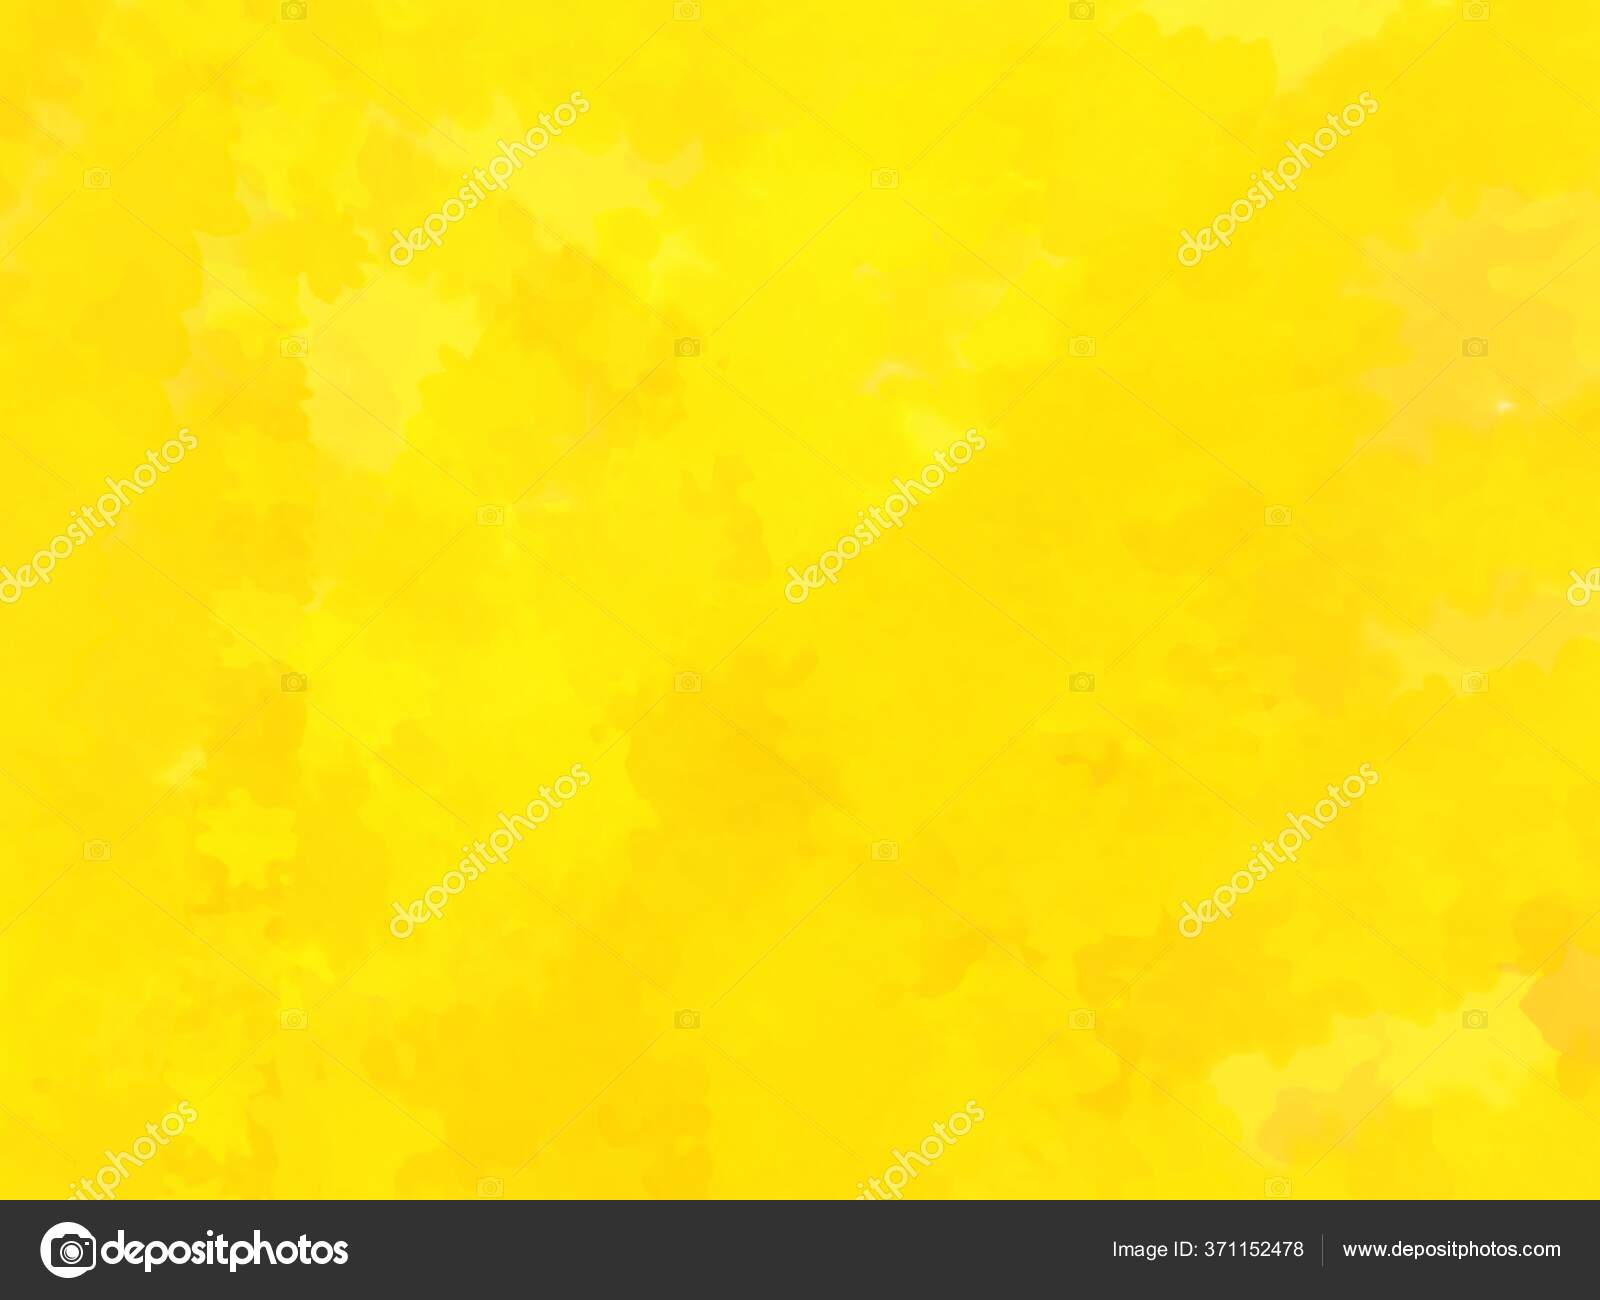 Golden yellow background Stock Photos, Royalty Free Golden yellow background  Images | Depositphotos